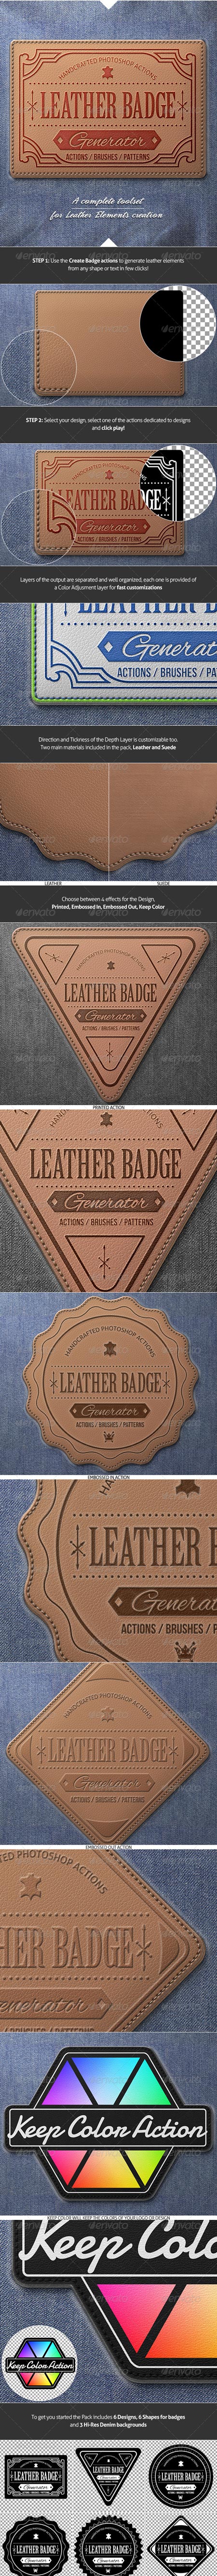 Leather Badge Generator - Photoshop Actions 8376002